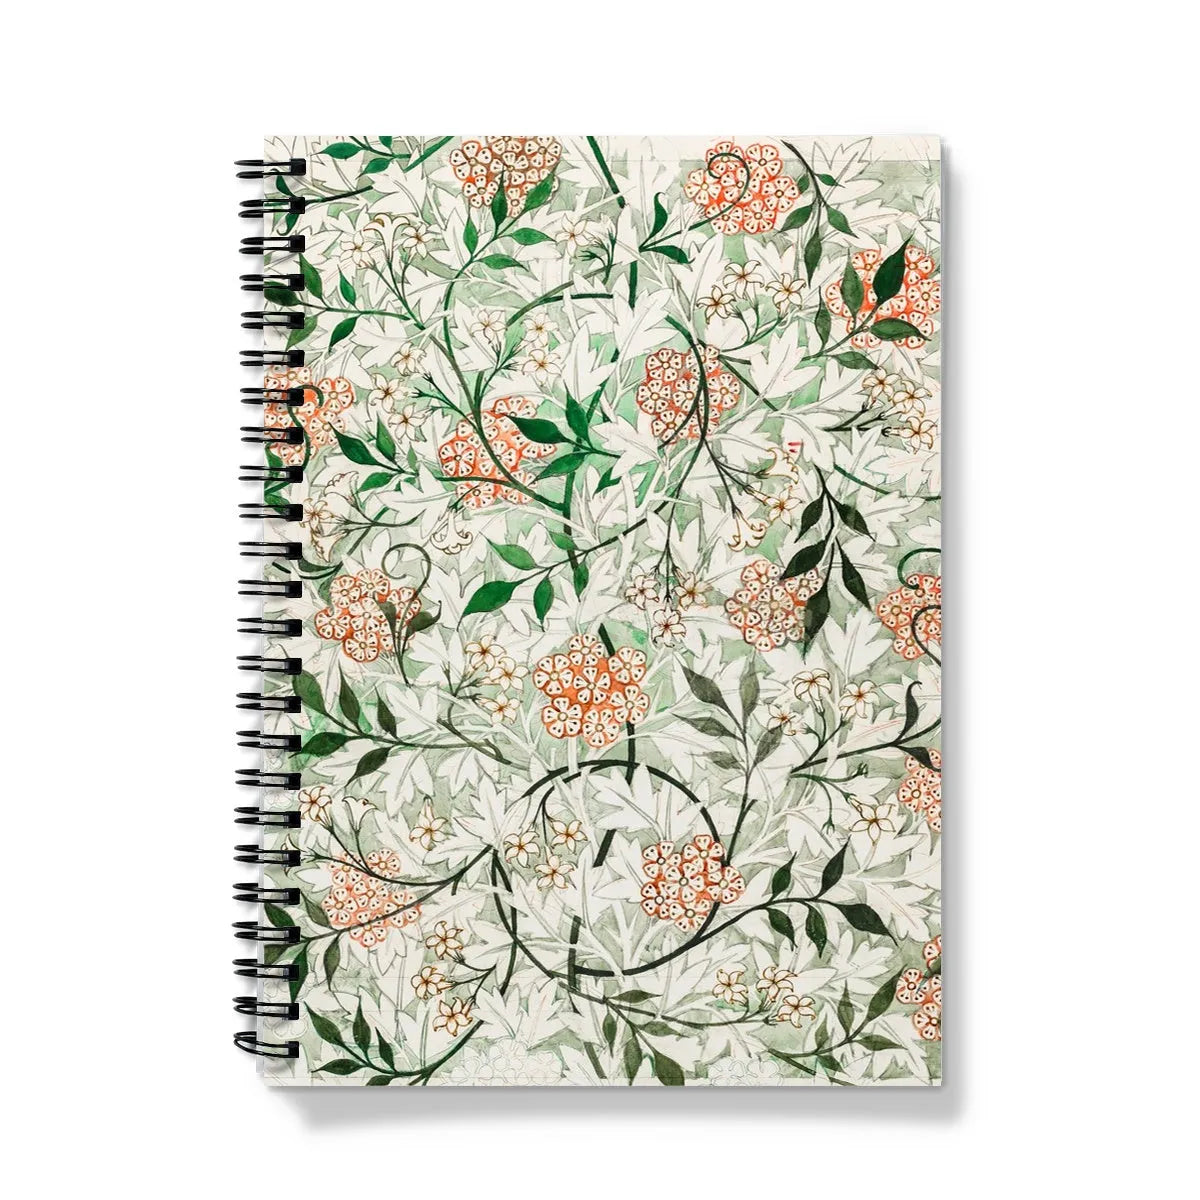 Jasmine - William Morris British Floral Textile Art Notebook - A5 - Graph Paper - Notebooks & Notepads - Aesthetic Art